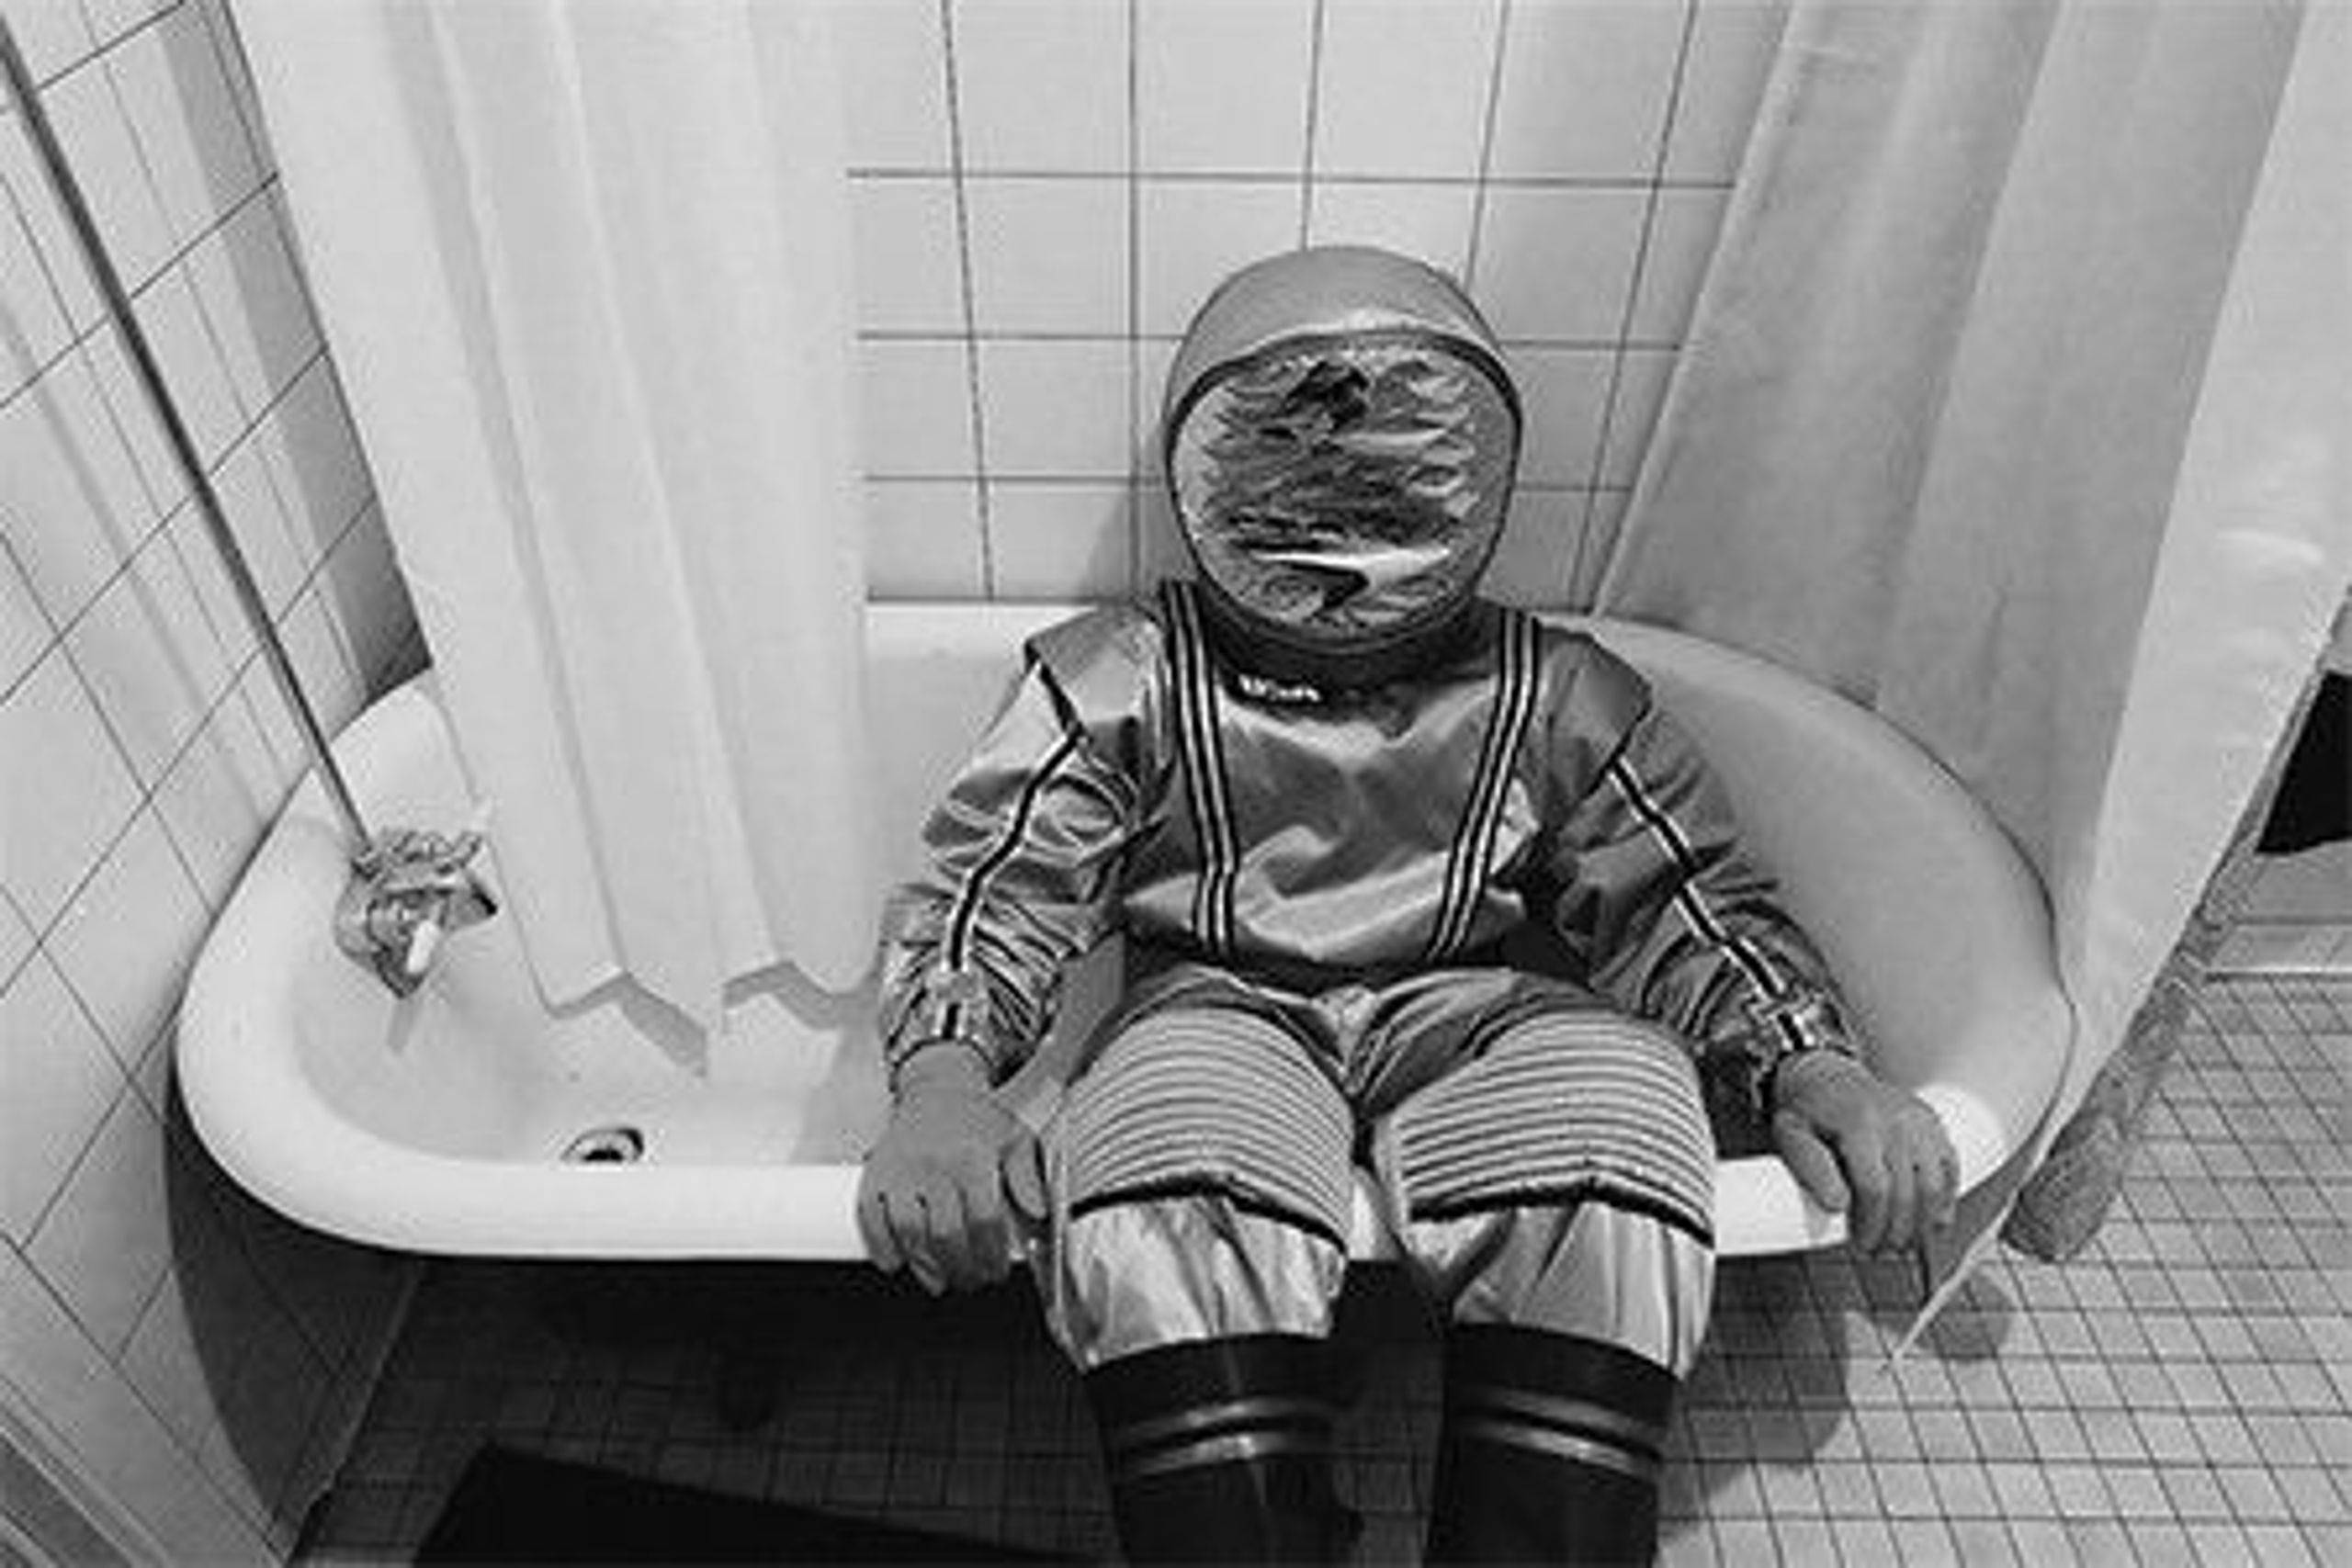 An astronaut sitting in a bath.